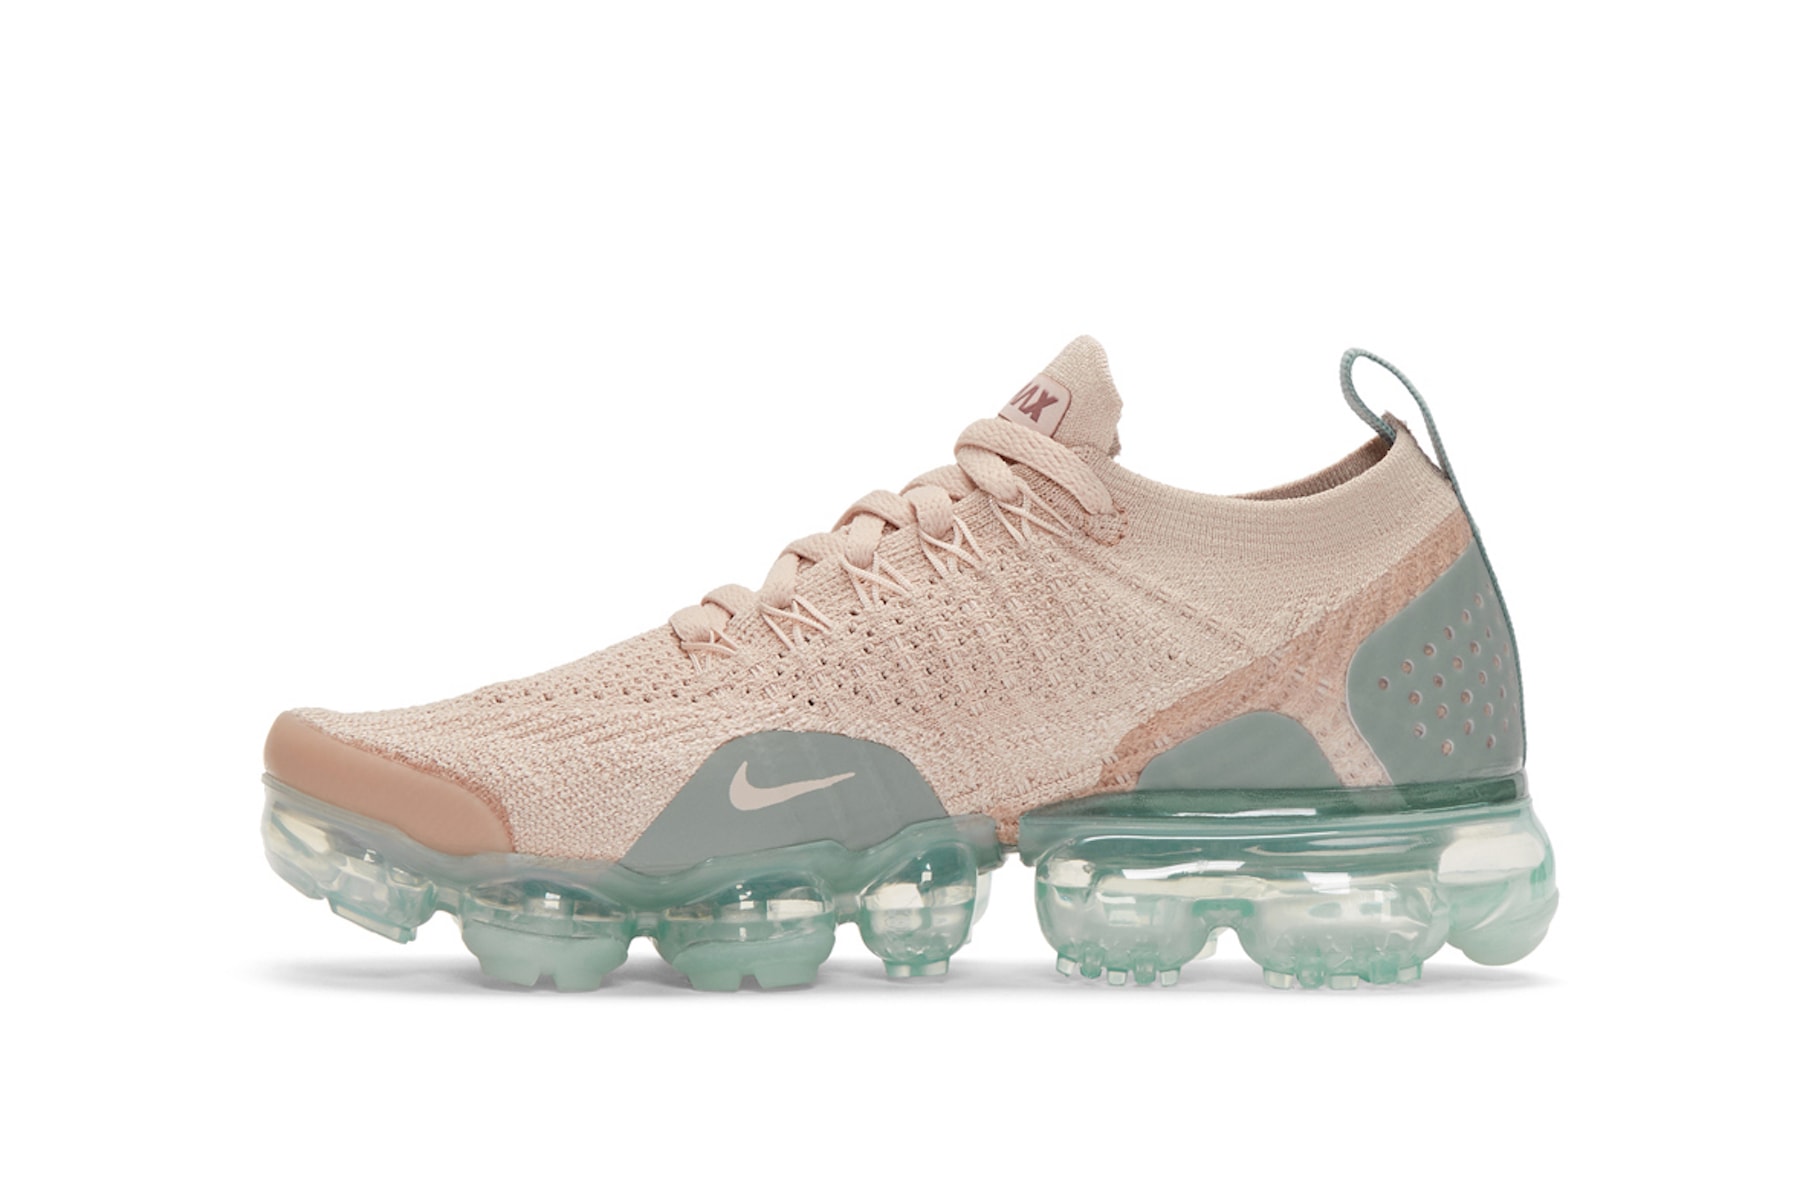 Nike Air VaporMax Flyknit 2.0 "Particle Beige" Pink Blue Ice Sneaker Sleek Trainer Crep Shoe